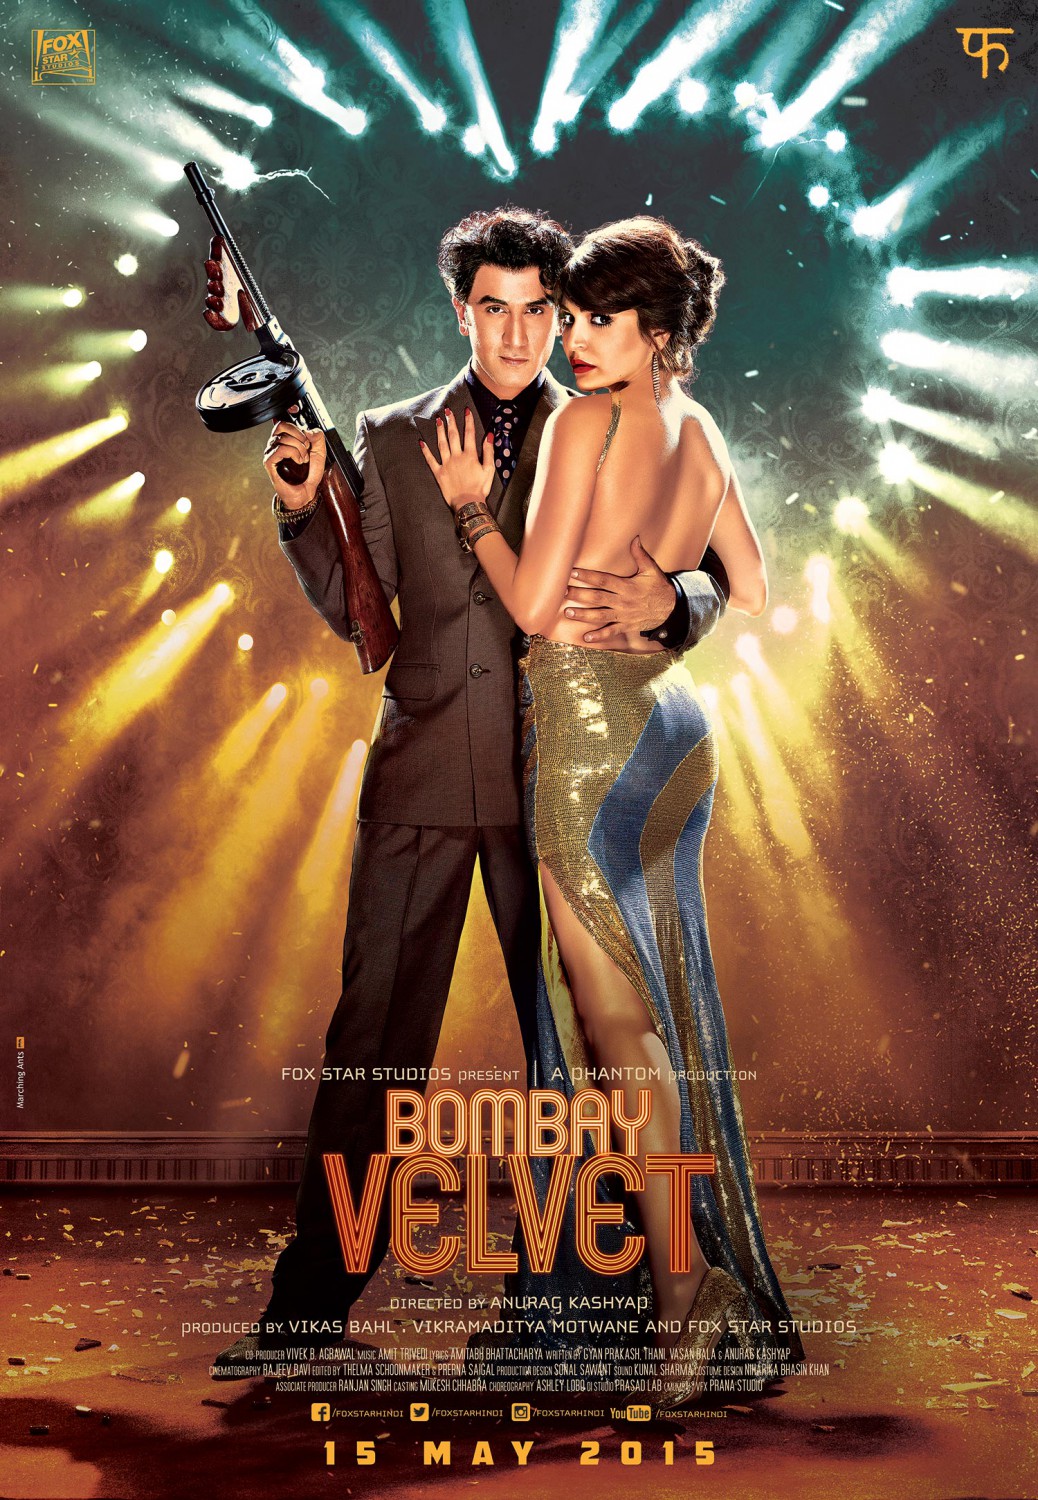 Extra Large Movie Poster Image for Bombay Velvet (#6 of 8)